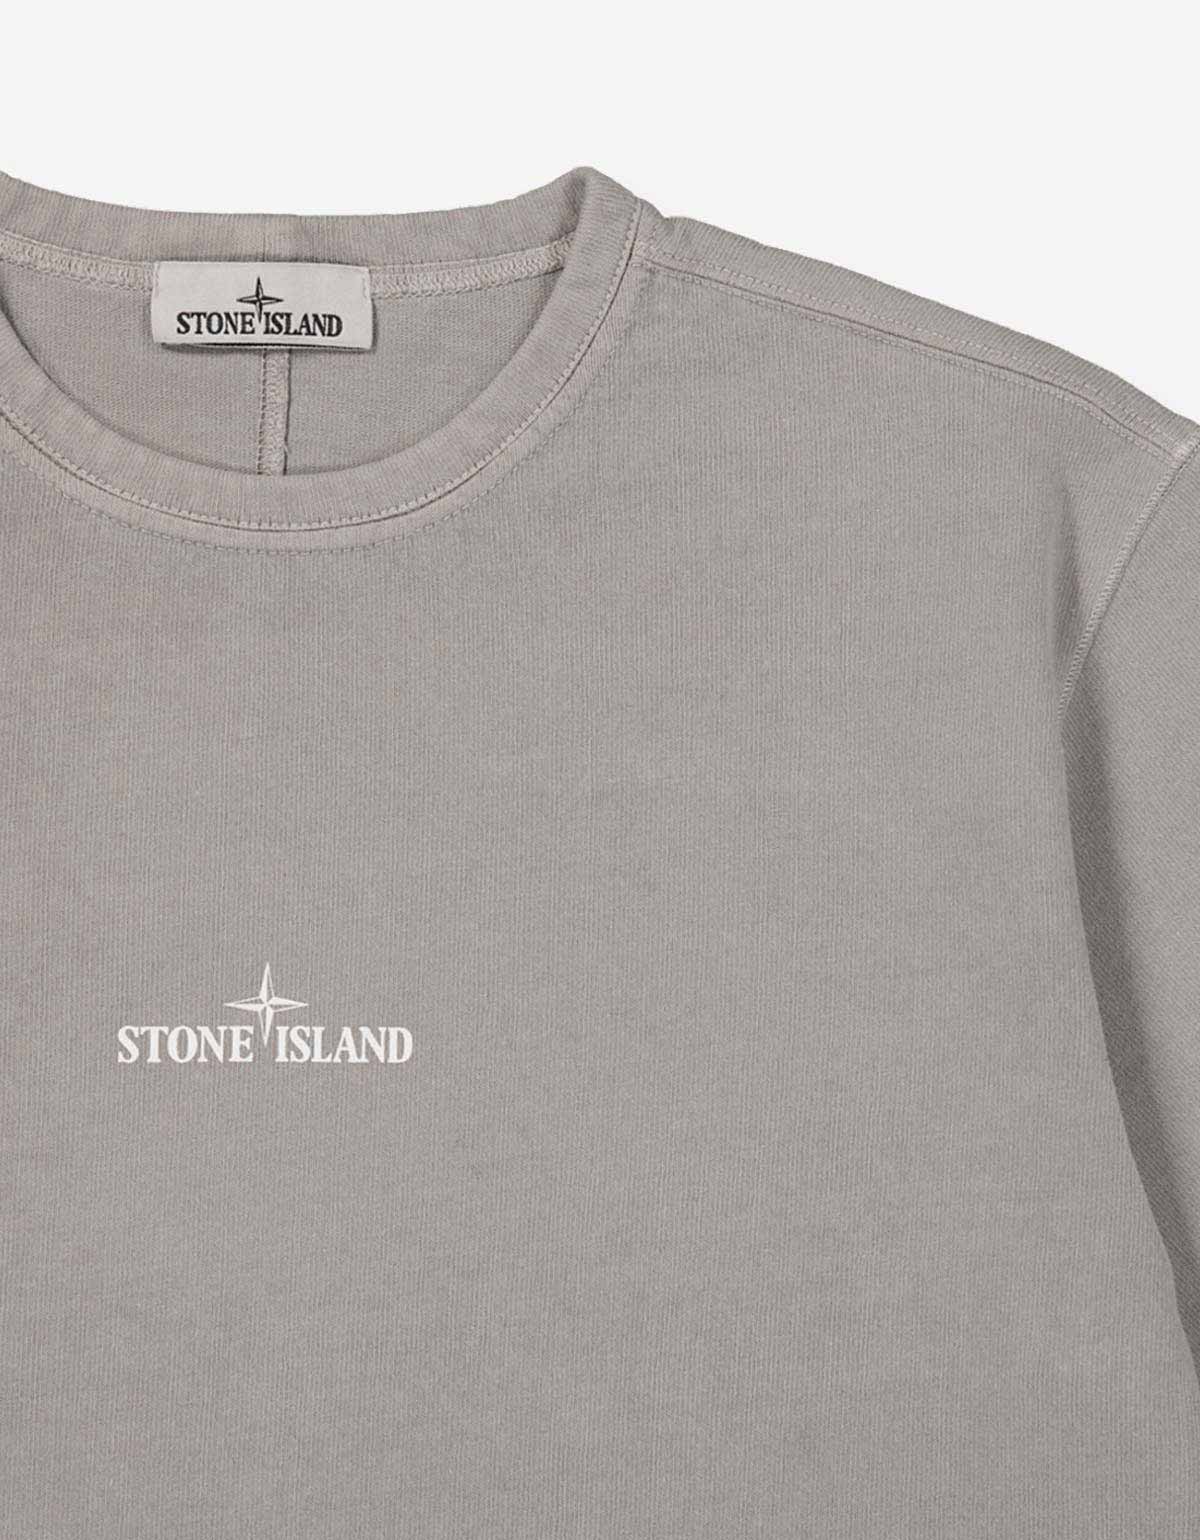 Stone Island Stone Island Stone Island  Grey Closed Loop Logo T-Shirt